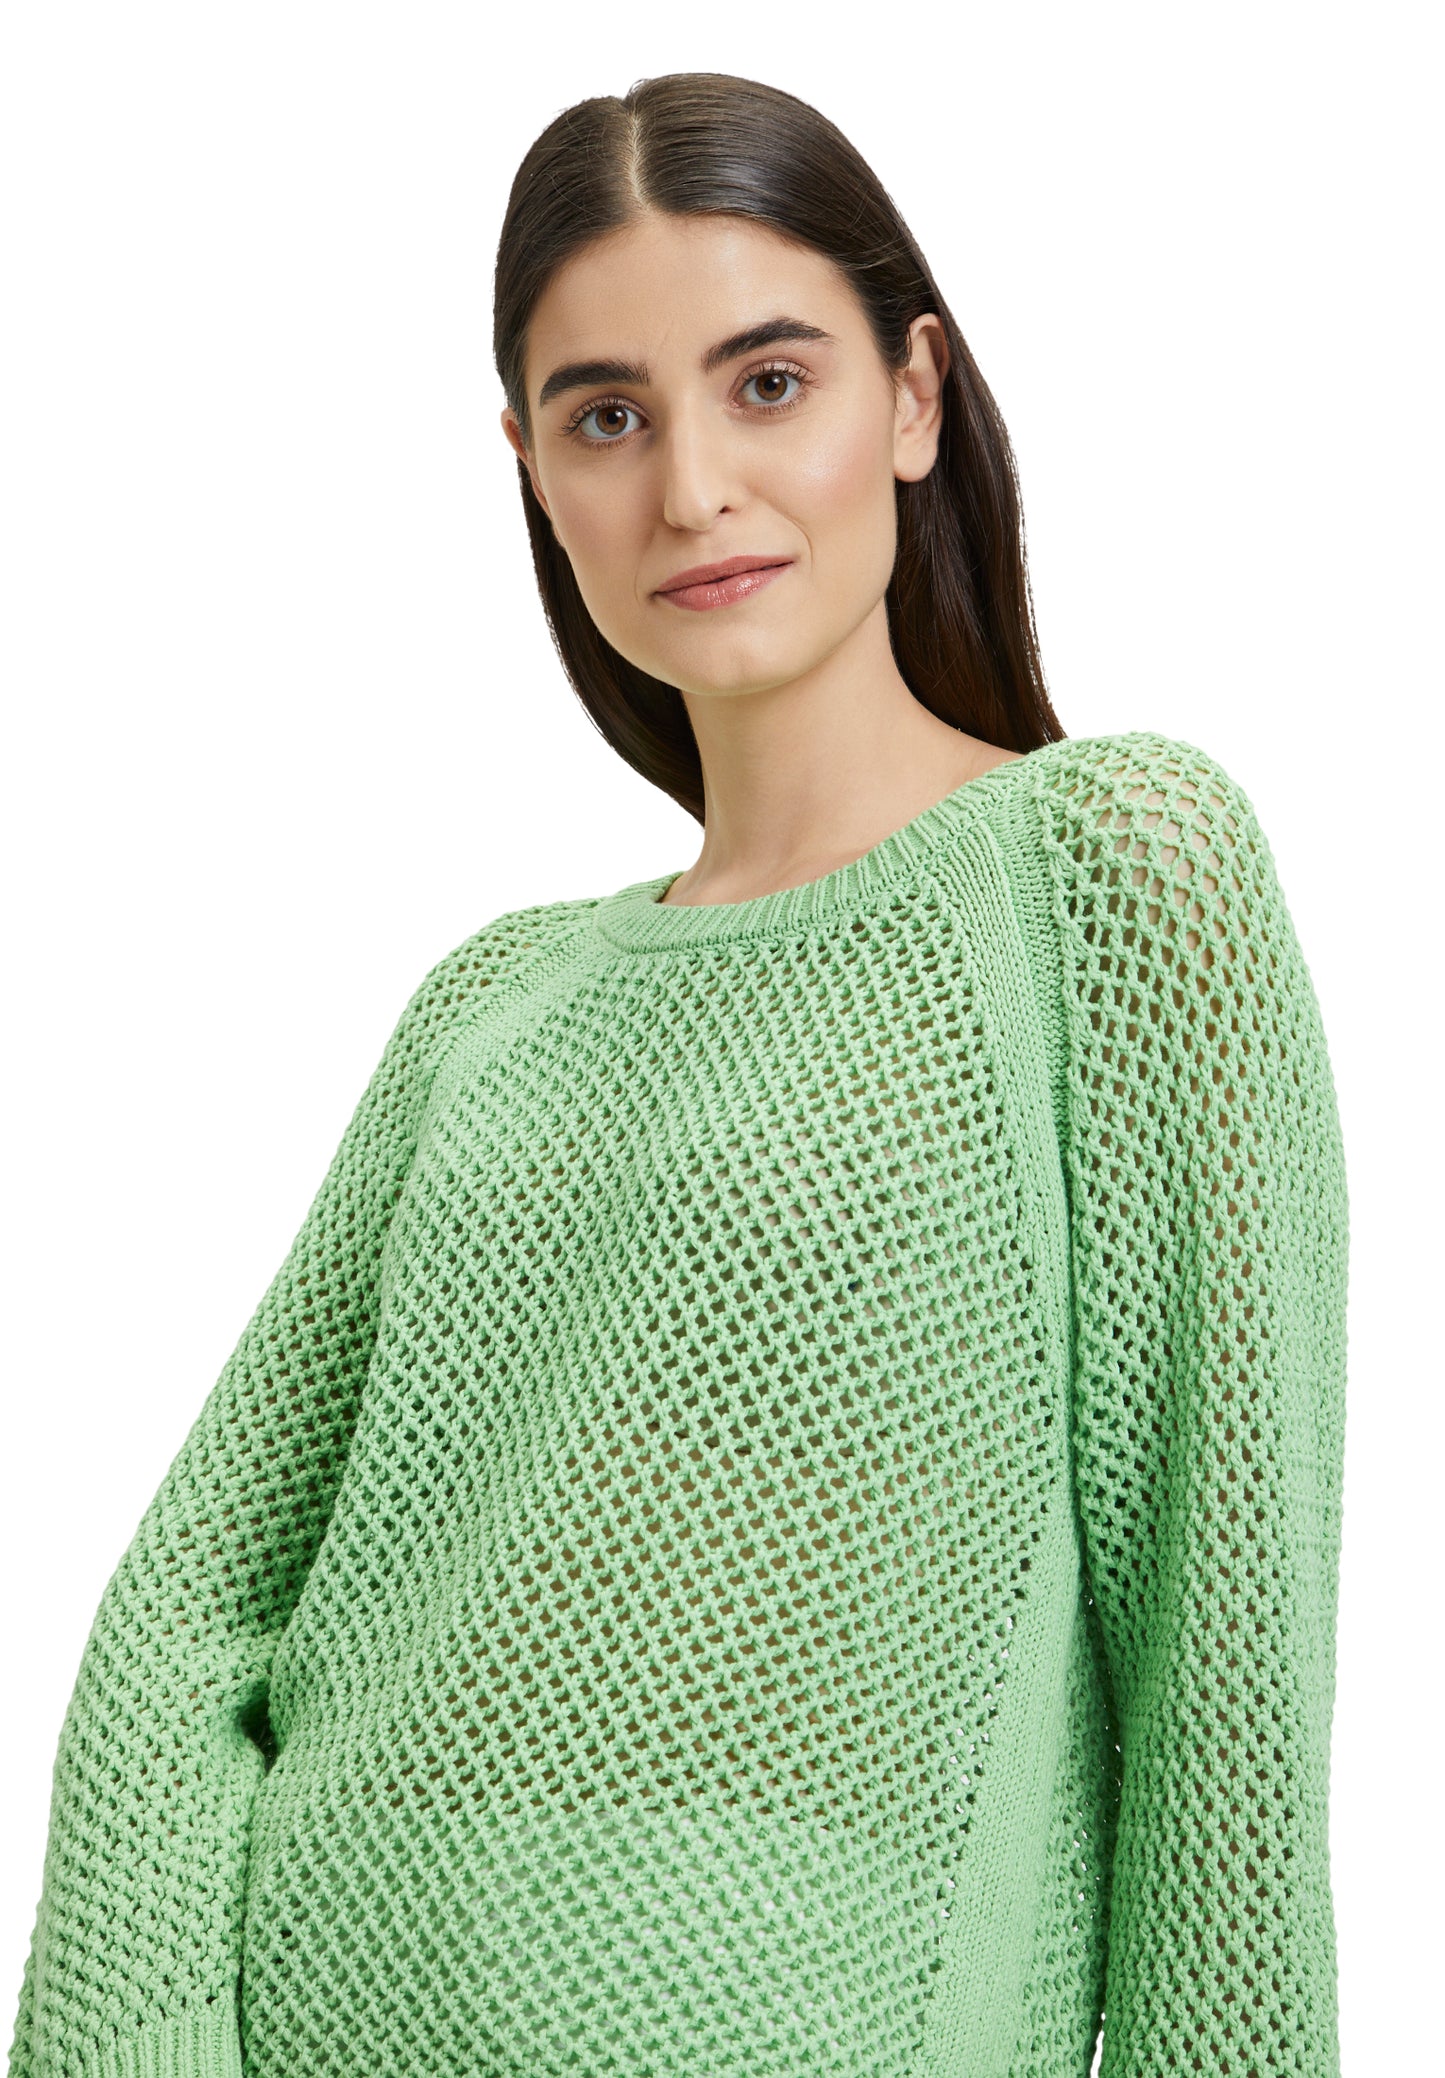 Betty Barclay 5072/2496 holey knit cotton sweater